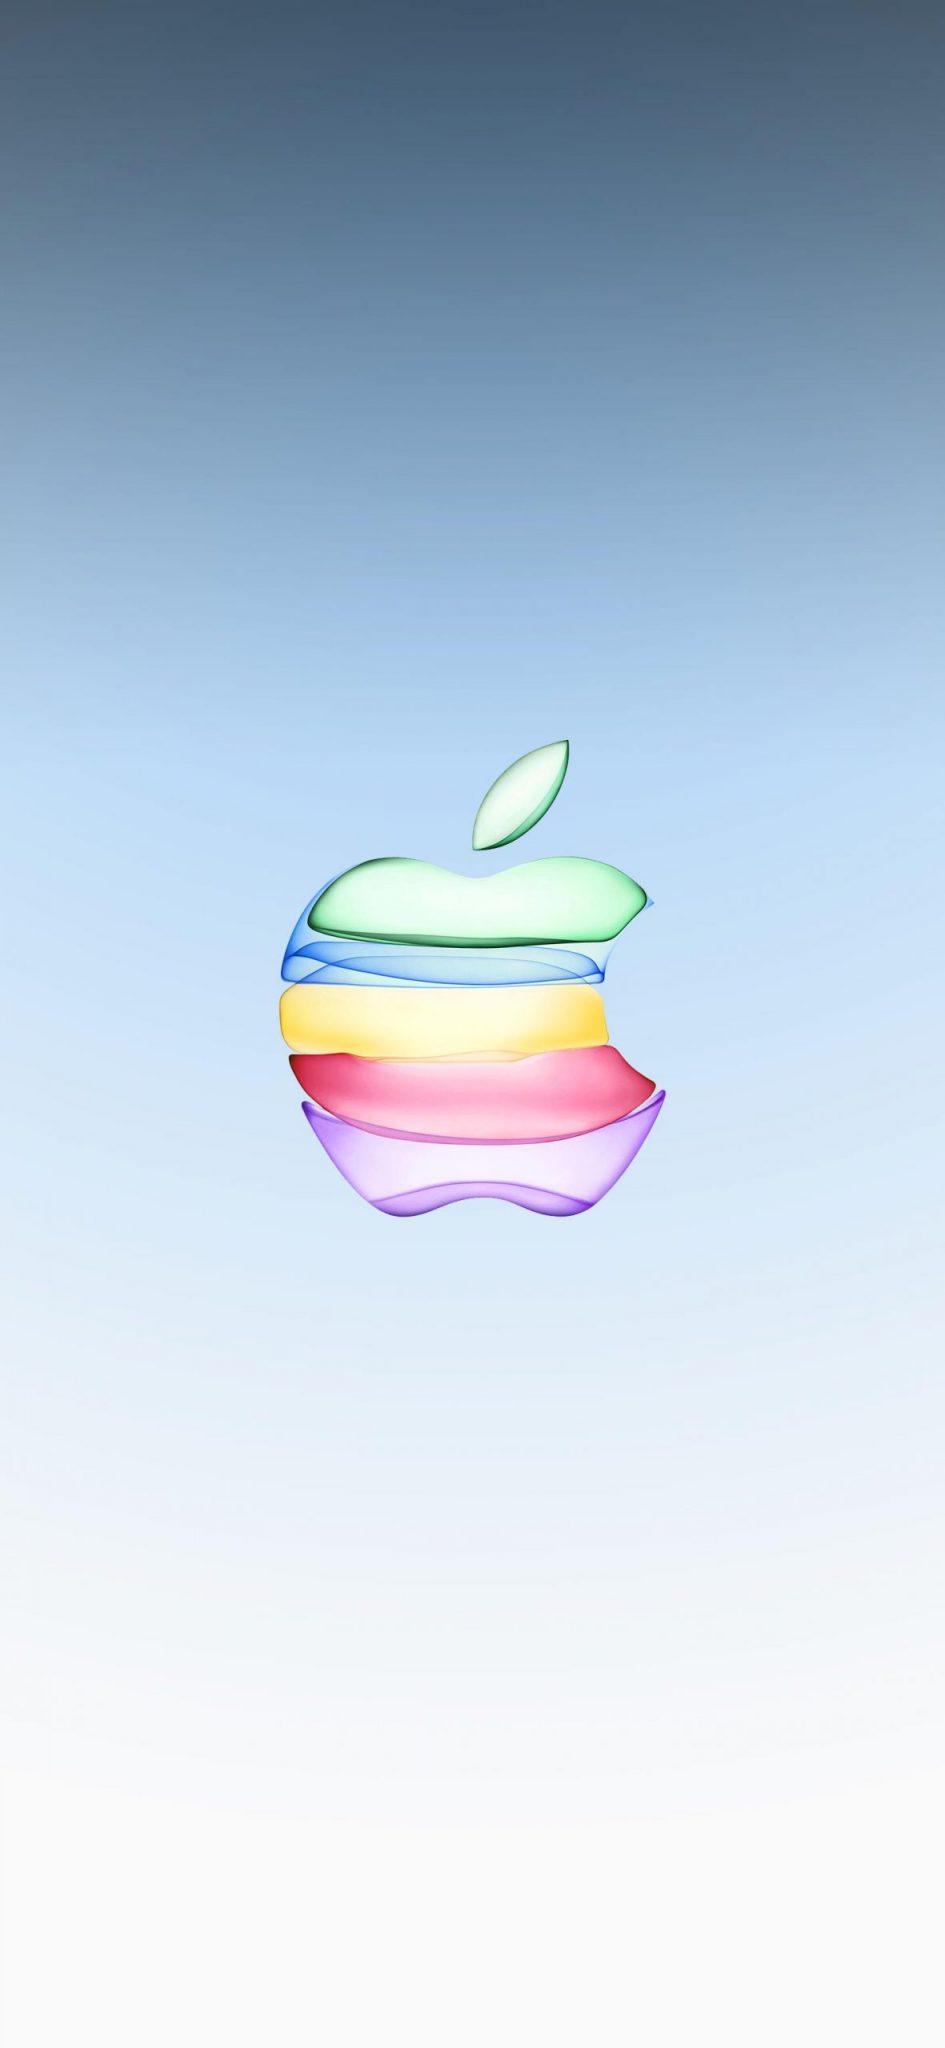 apple-event-2019-wallpaper-01-TechFoogle